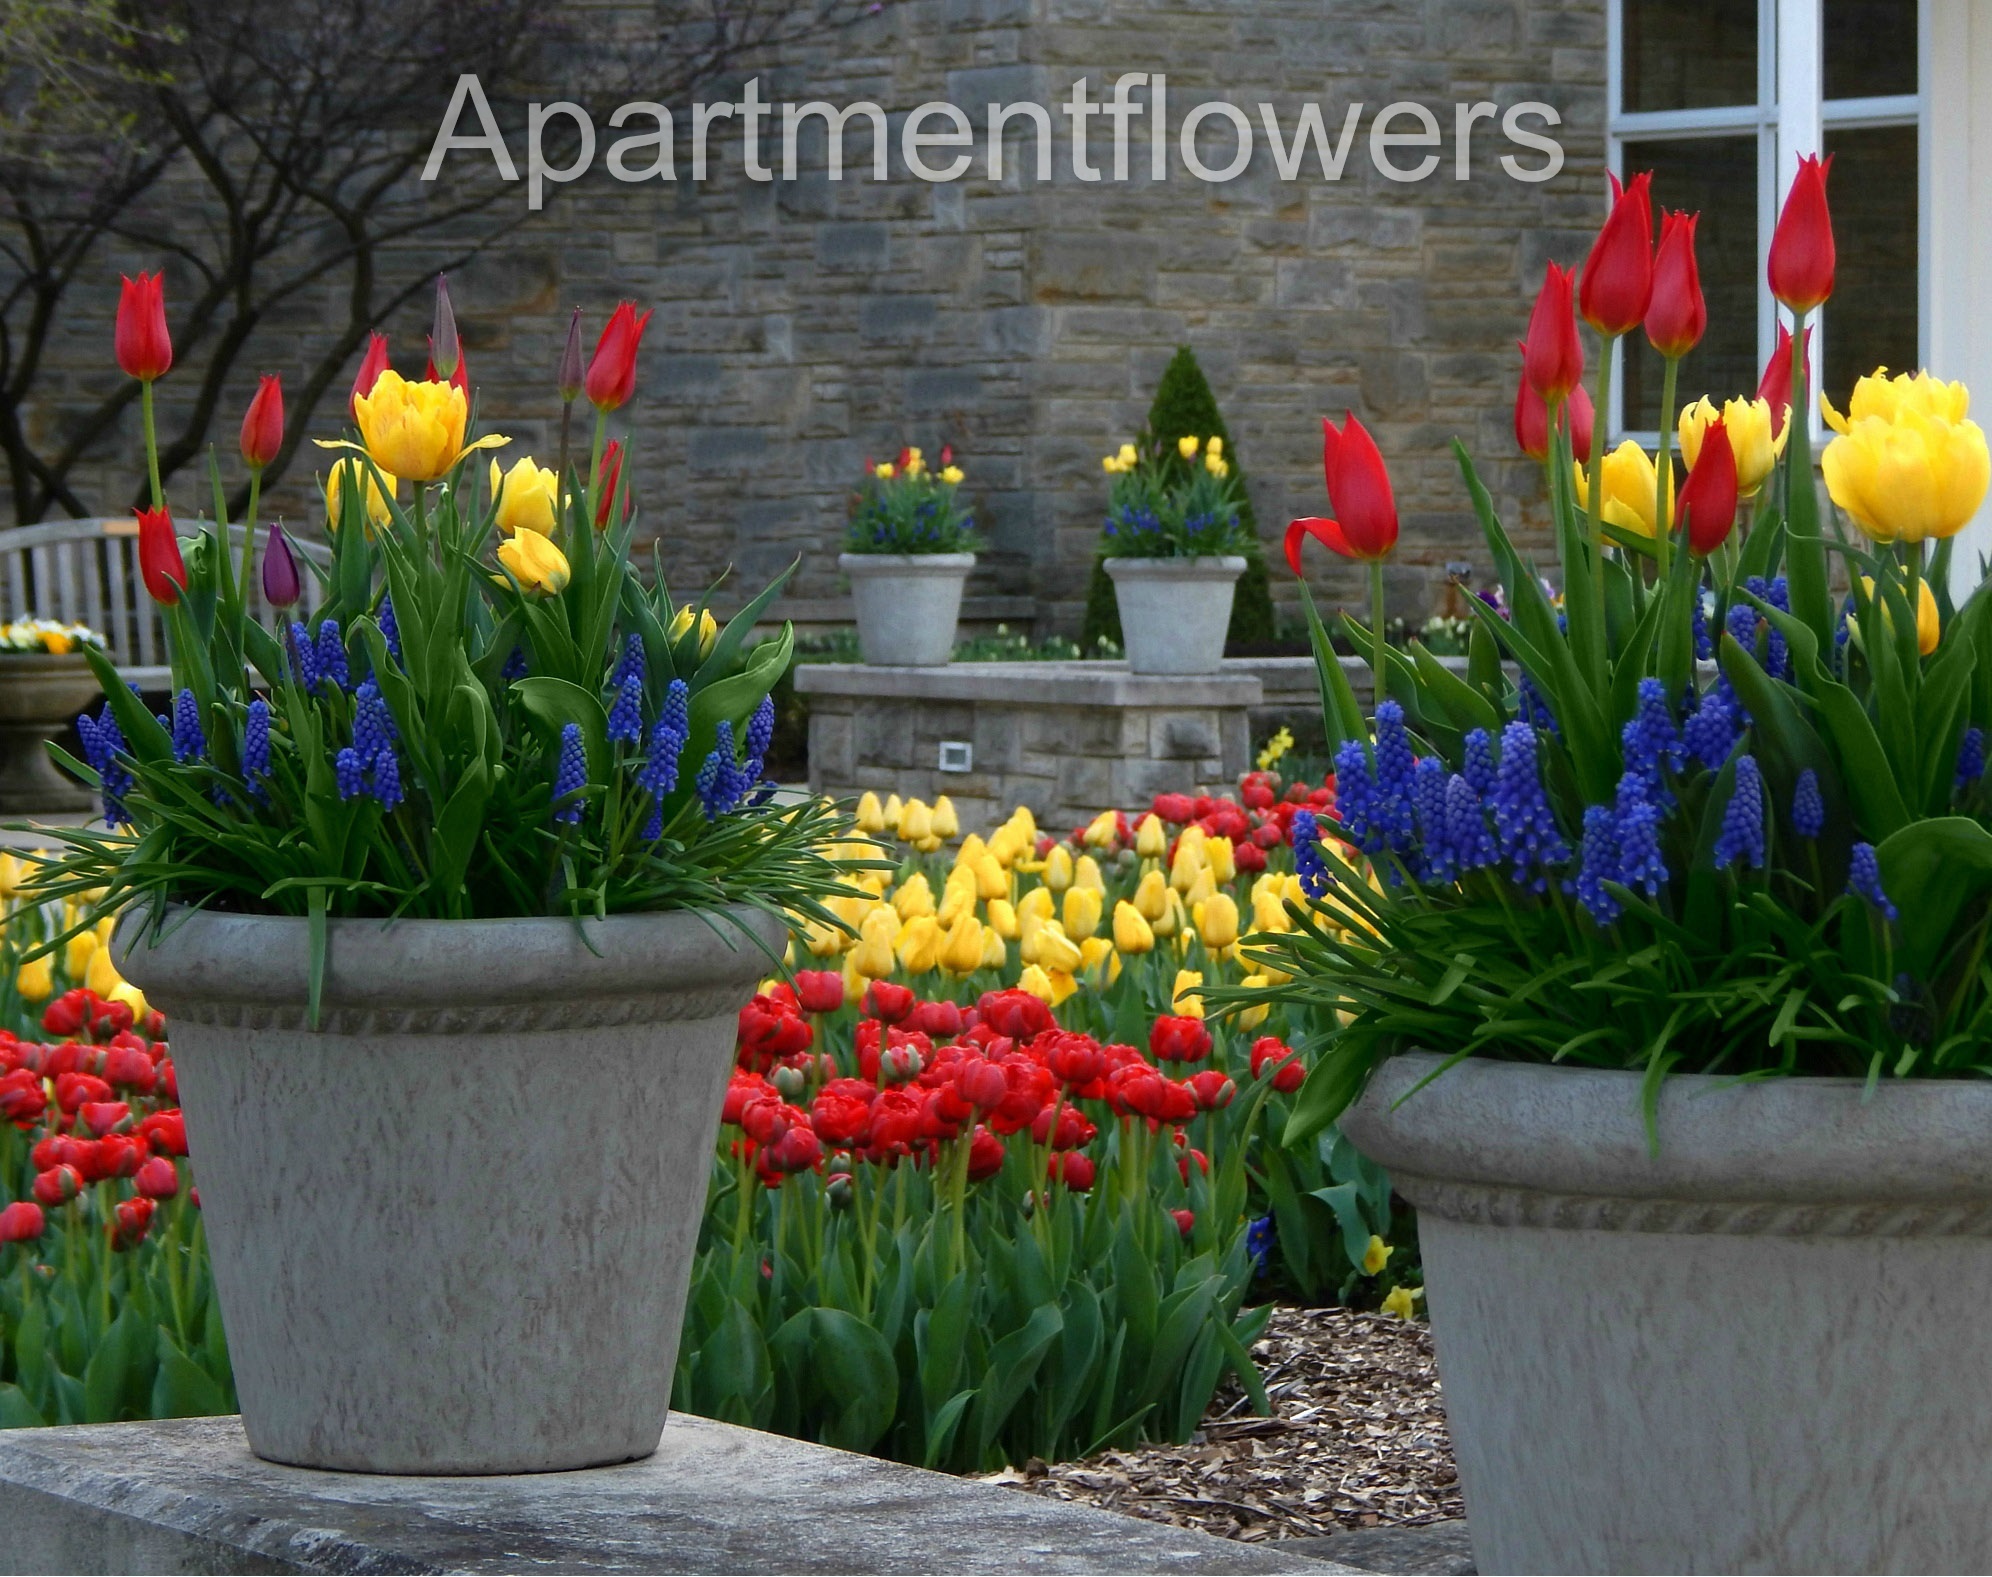 soil for tulips in pots